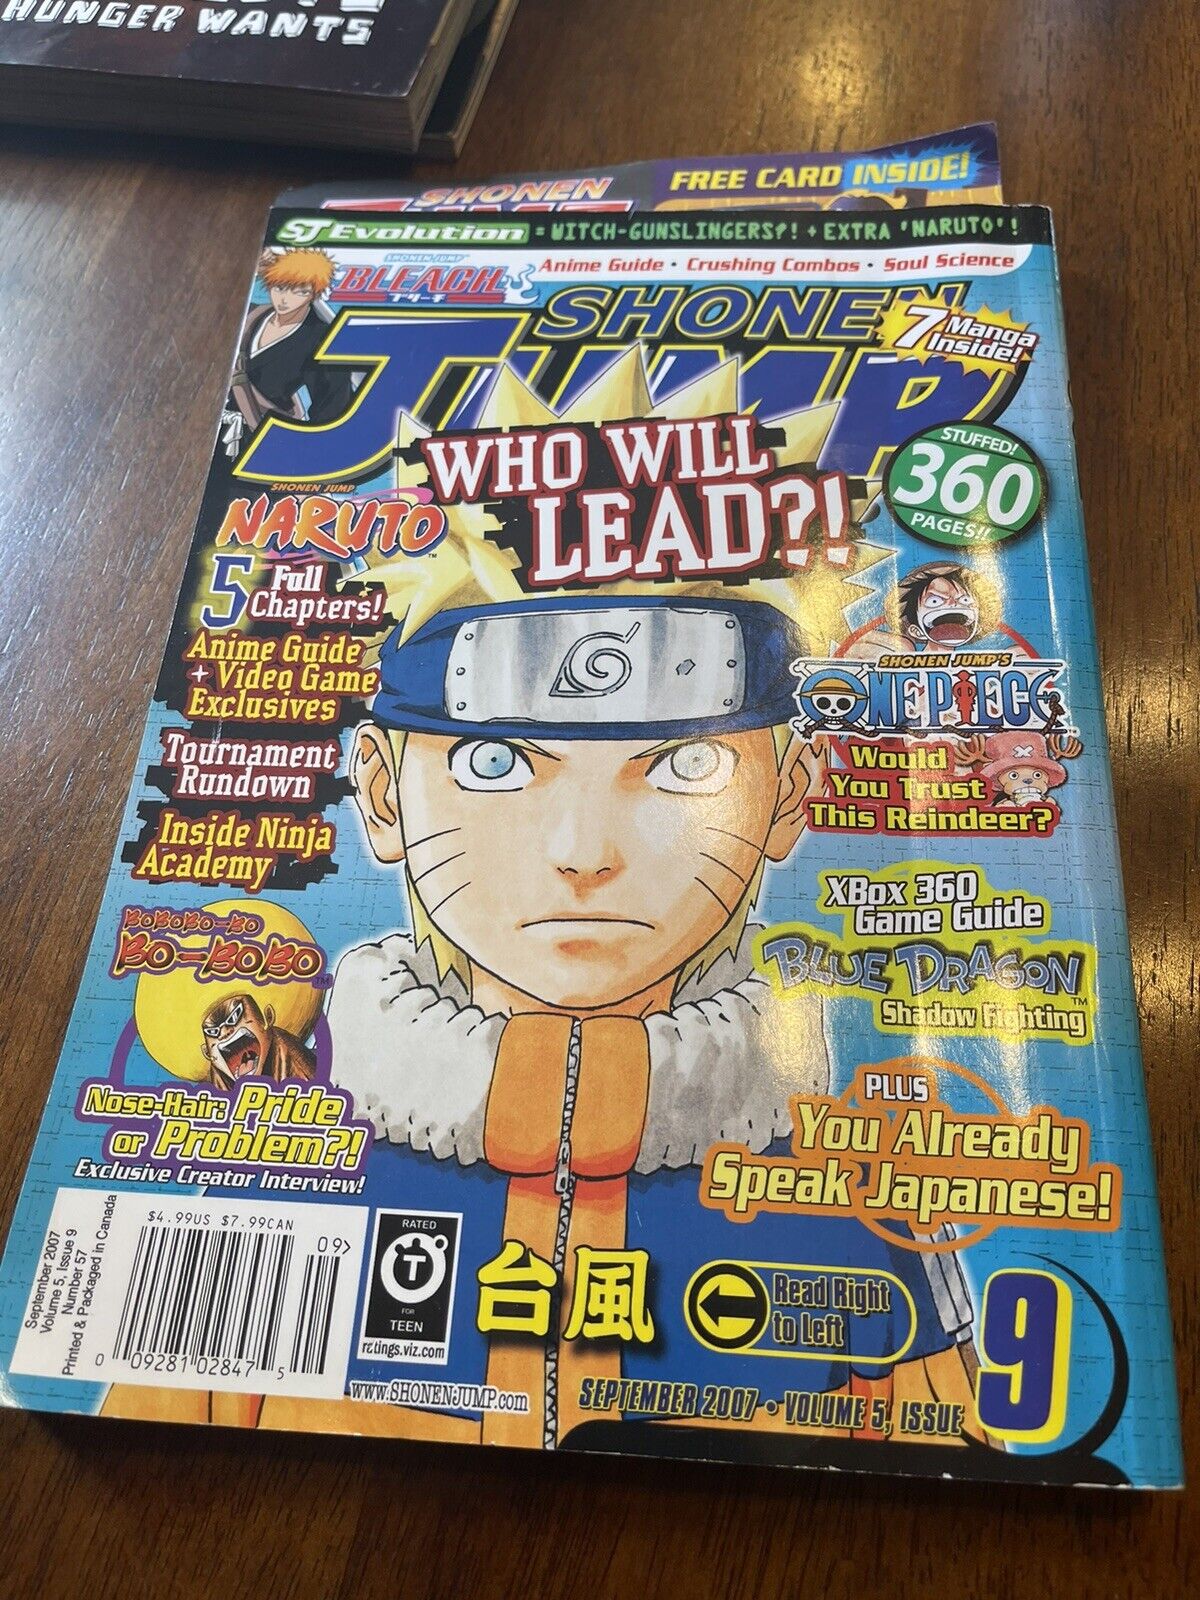 SHONEN JUMP VOLUME 5 ISSUE 9 #57 SEPT 2007 W/ CARD Naruto Cover